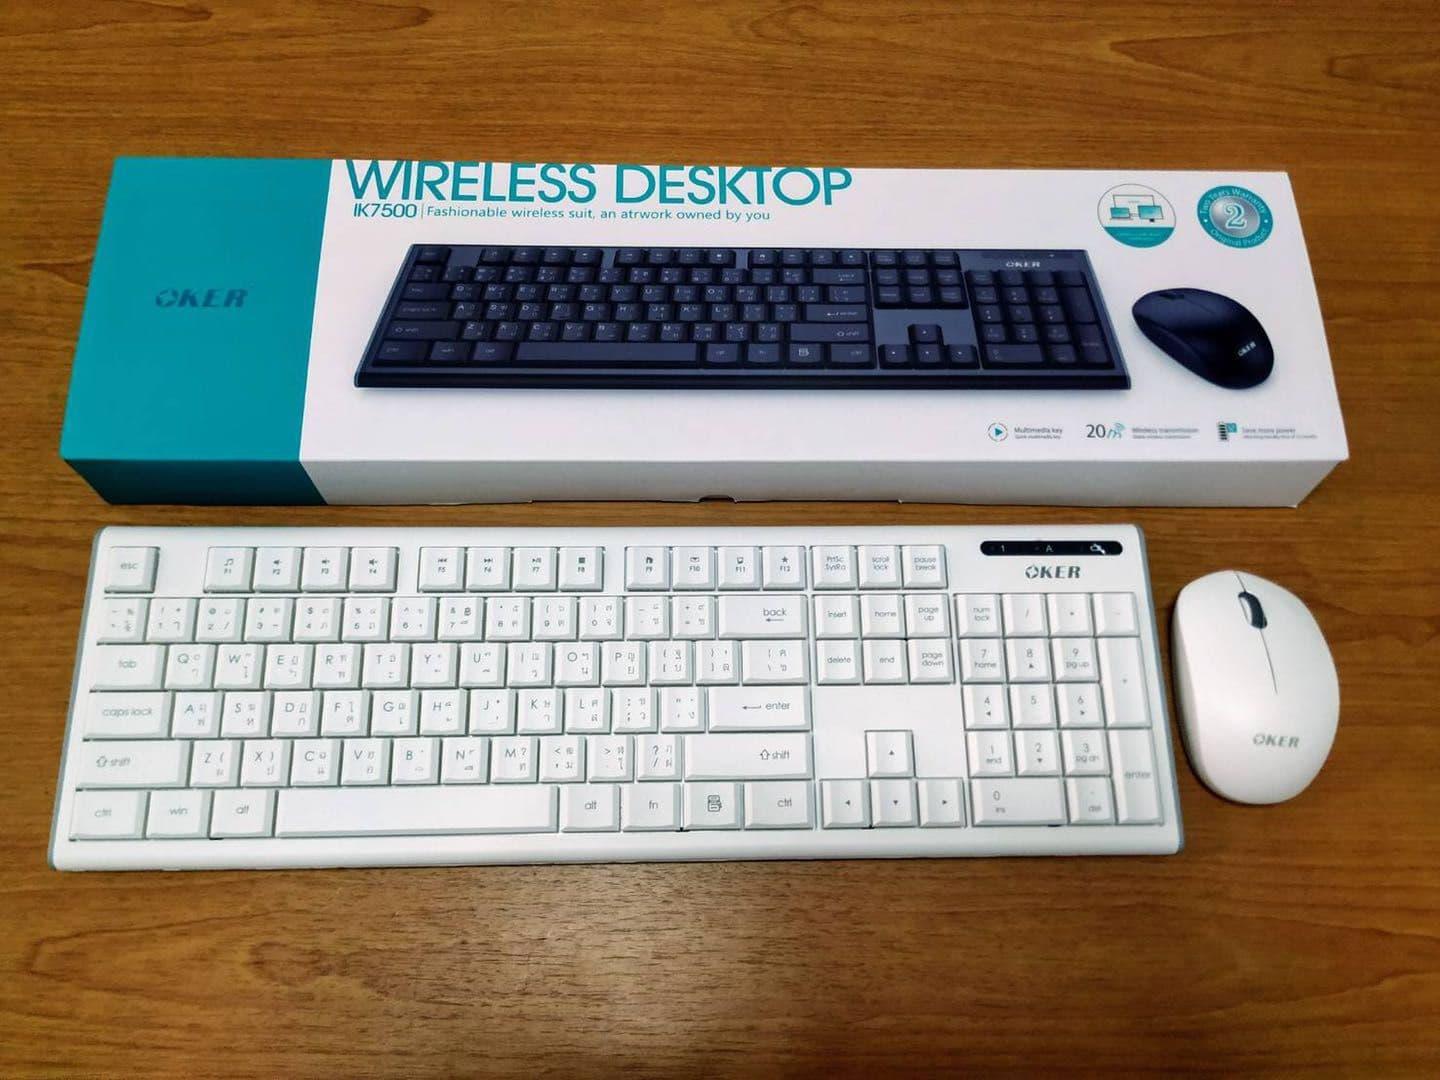 OKER ชุดคีบอร์ดเมาส์ไร้สาย Wireless keyboard mouse set รุ่น ik7500